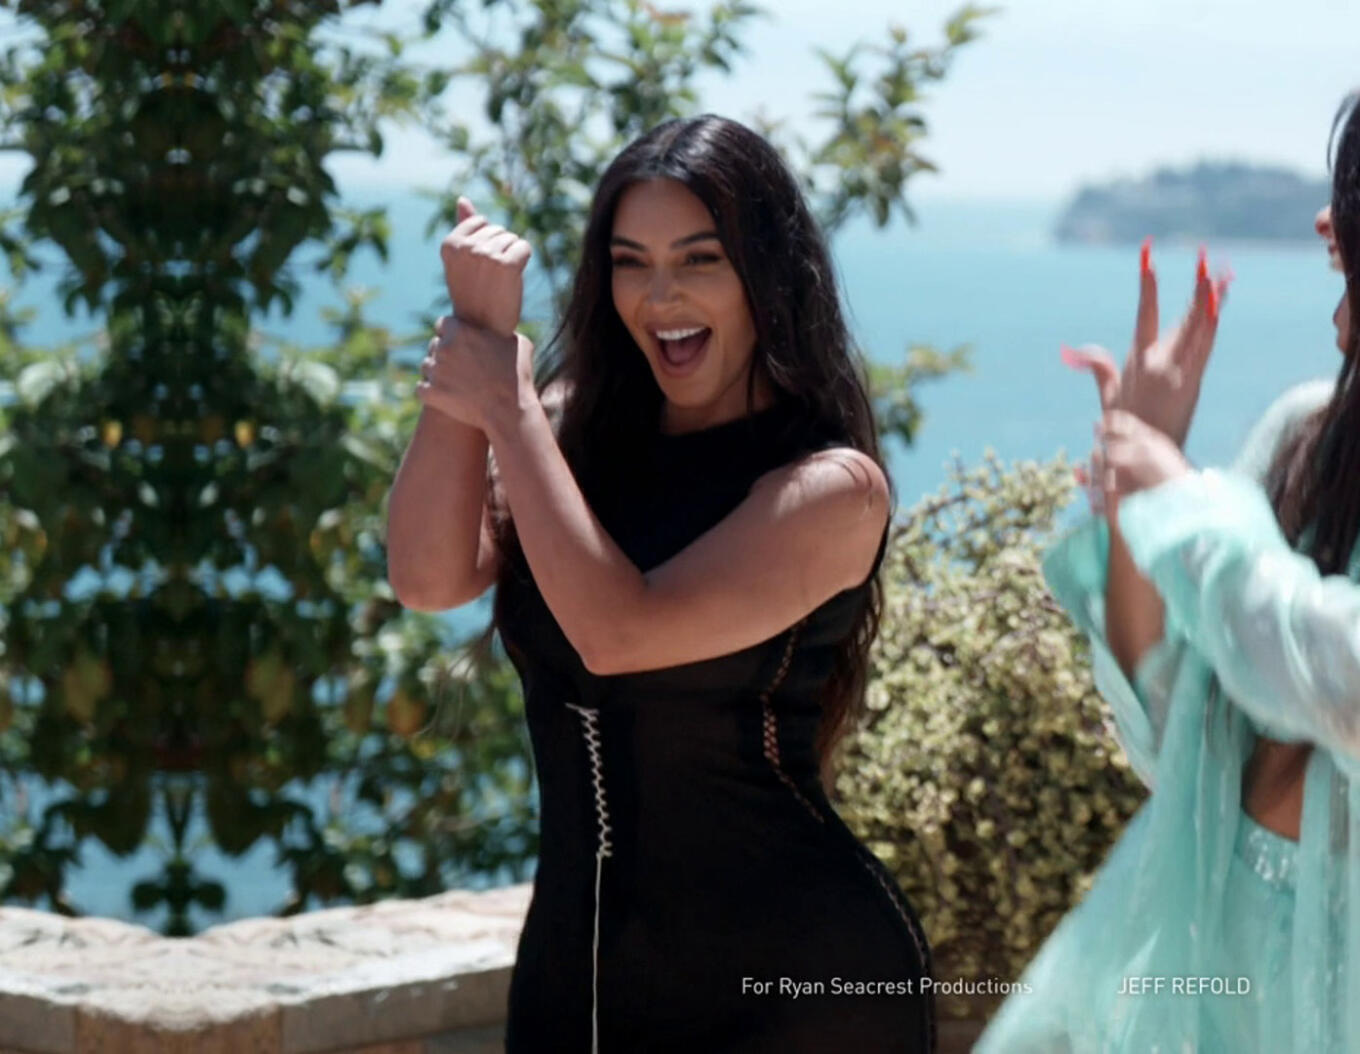 Kim Kardashian - Keeping Up With The Kardashians | Season 20 Episode 4 | Kim Kardashian style